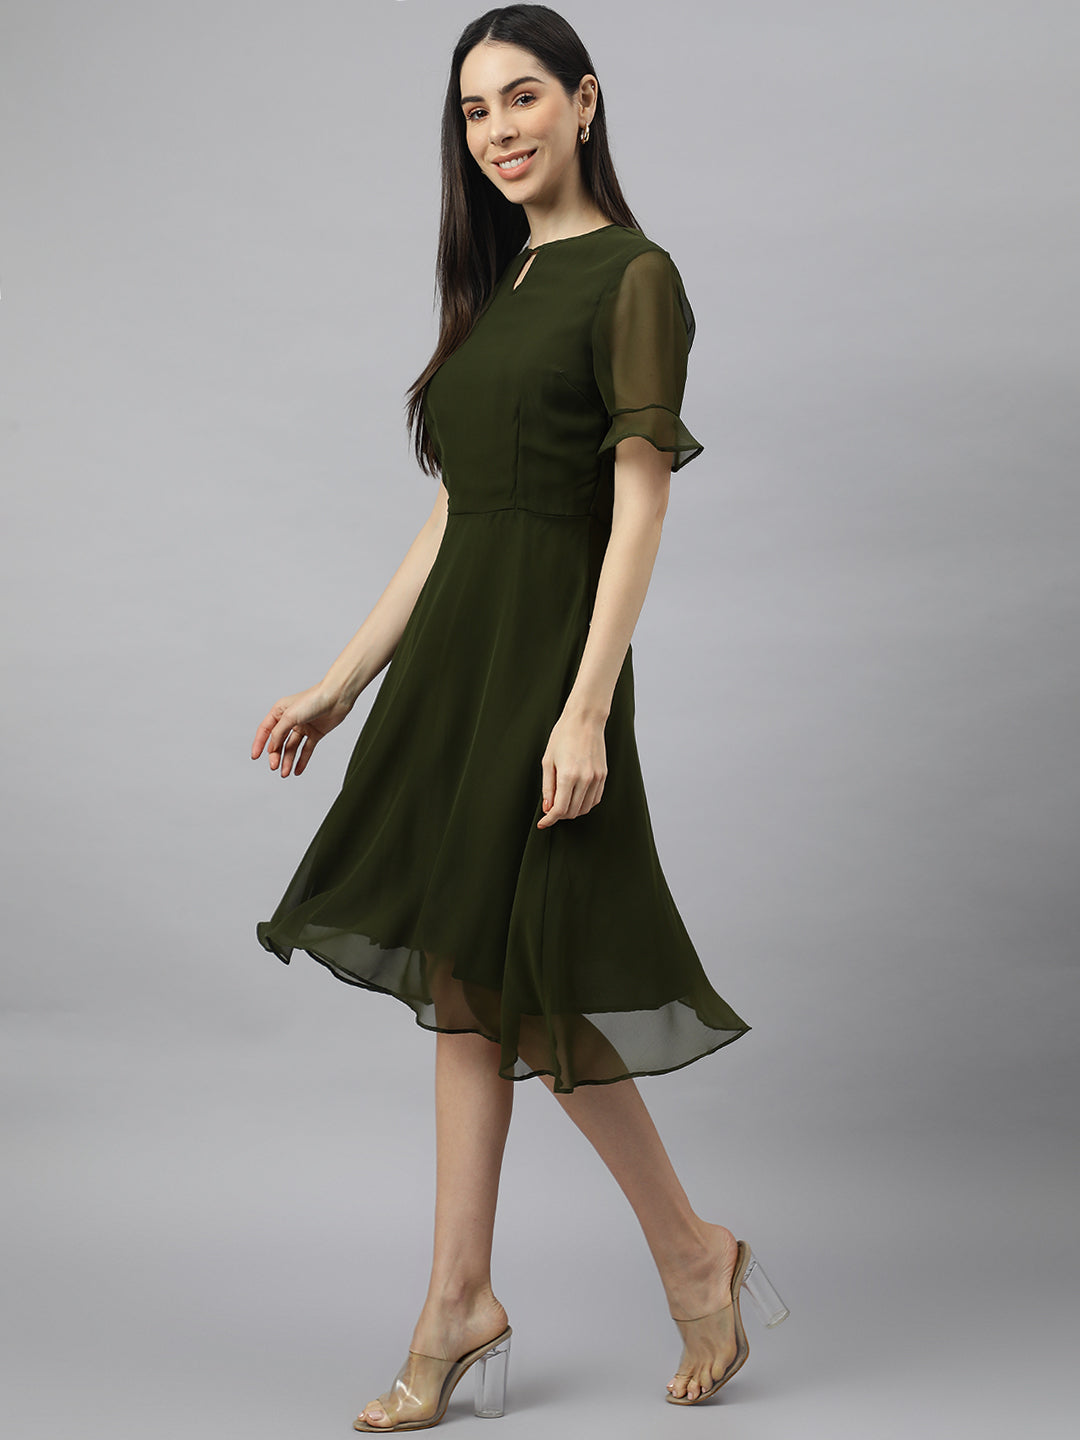 Valbone Women’s Green Georgette Floral Print Dress